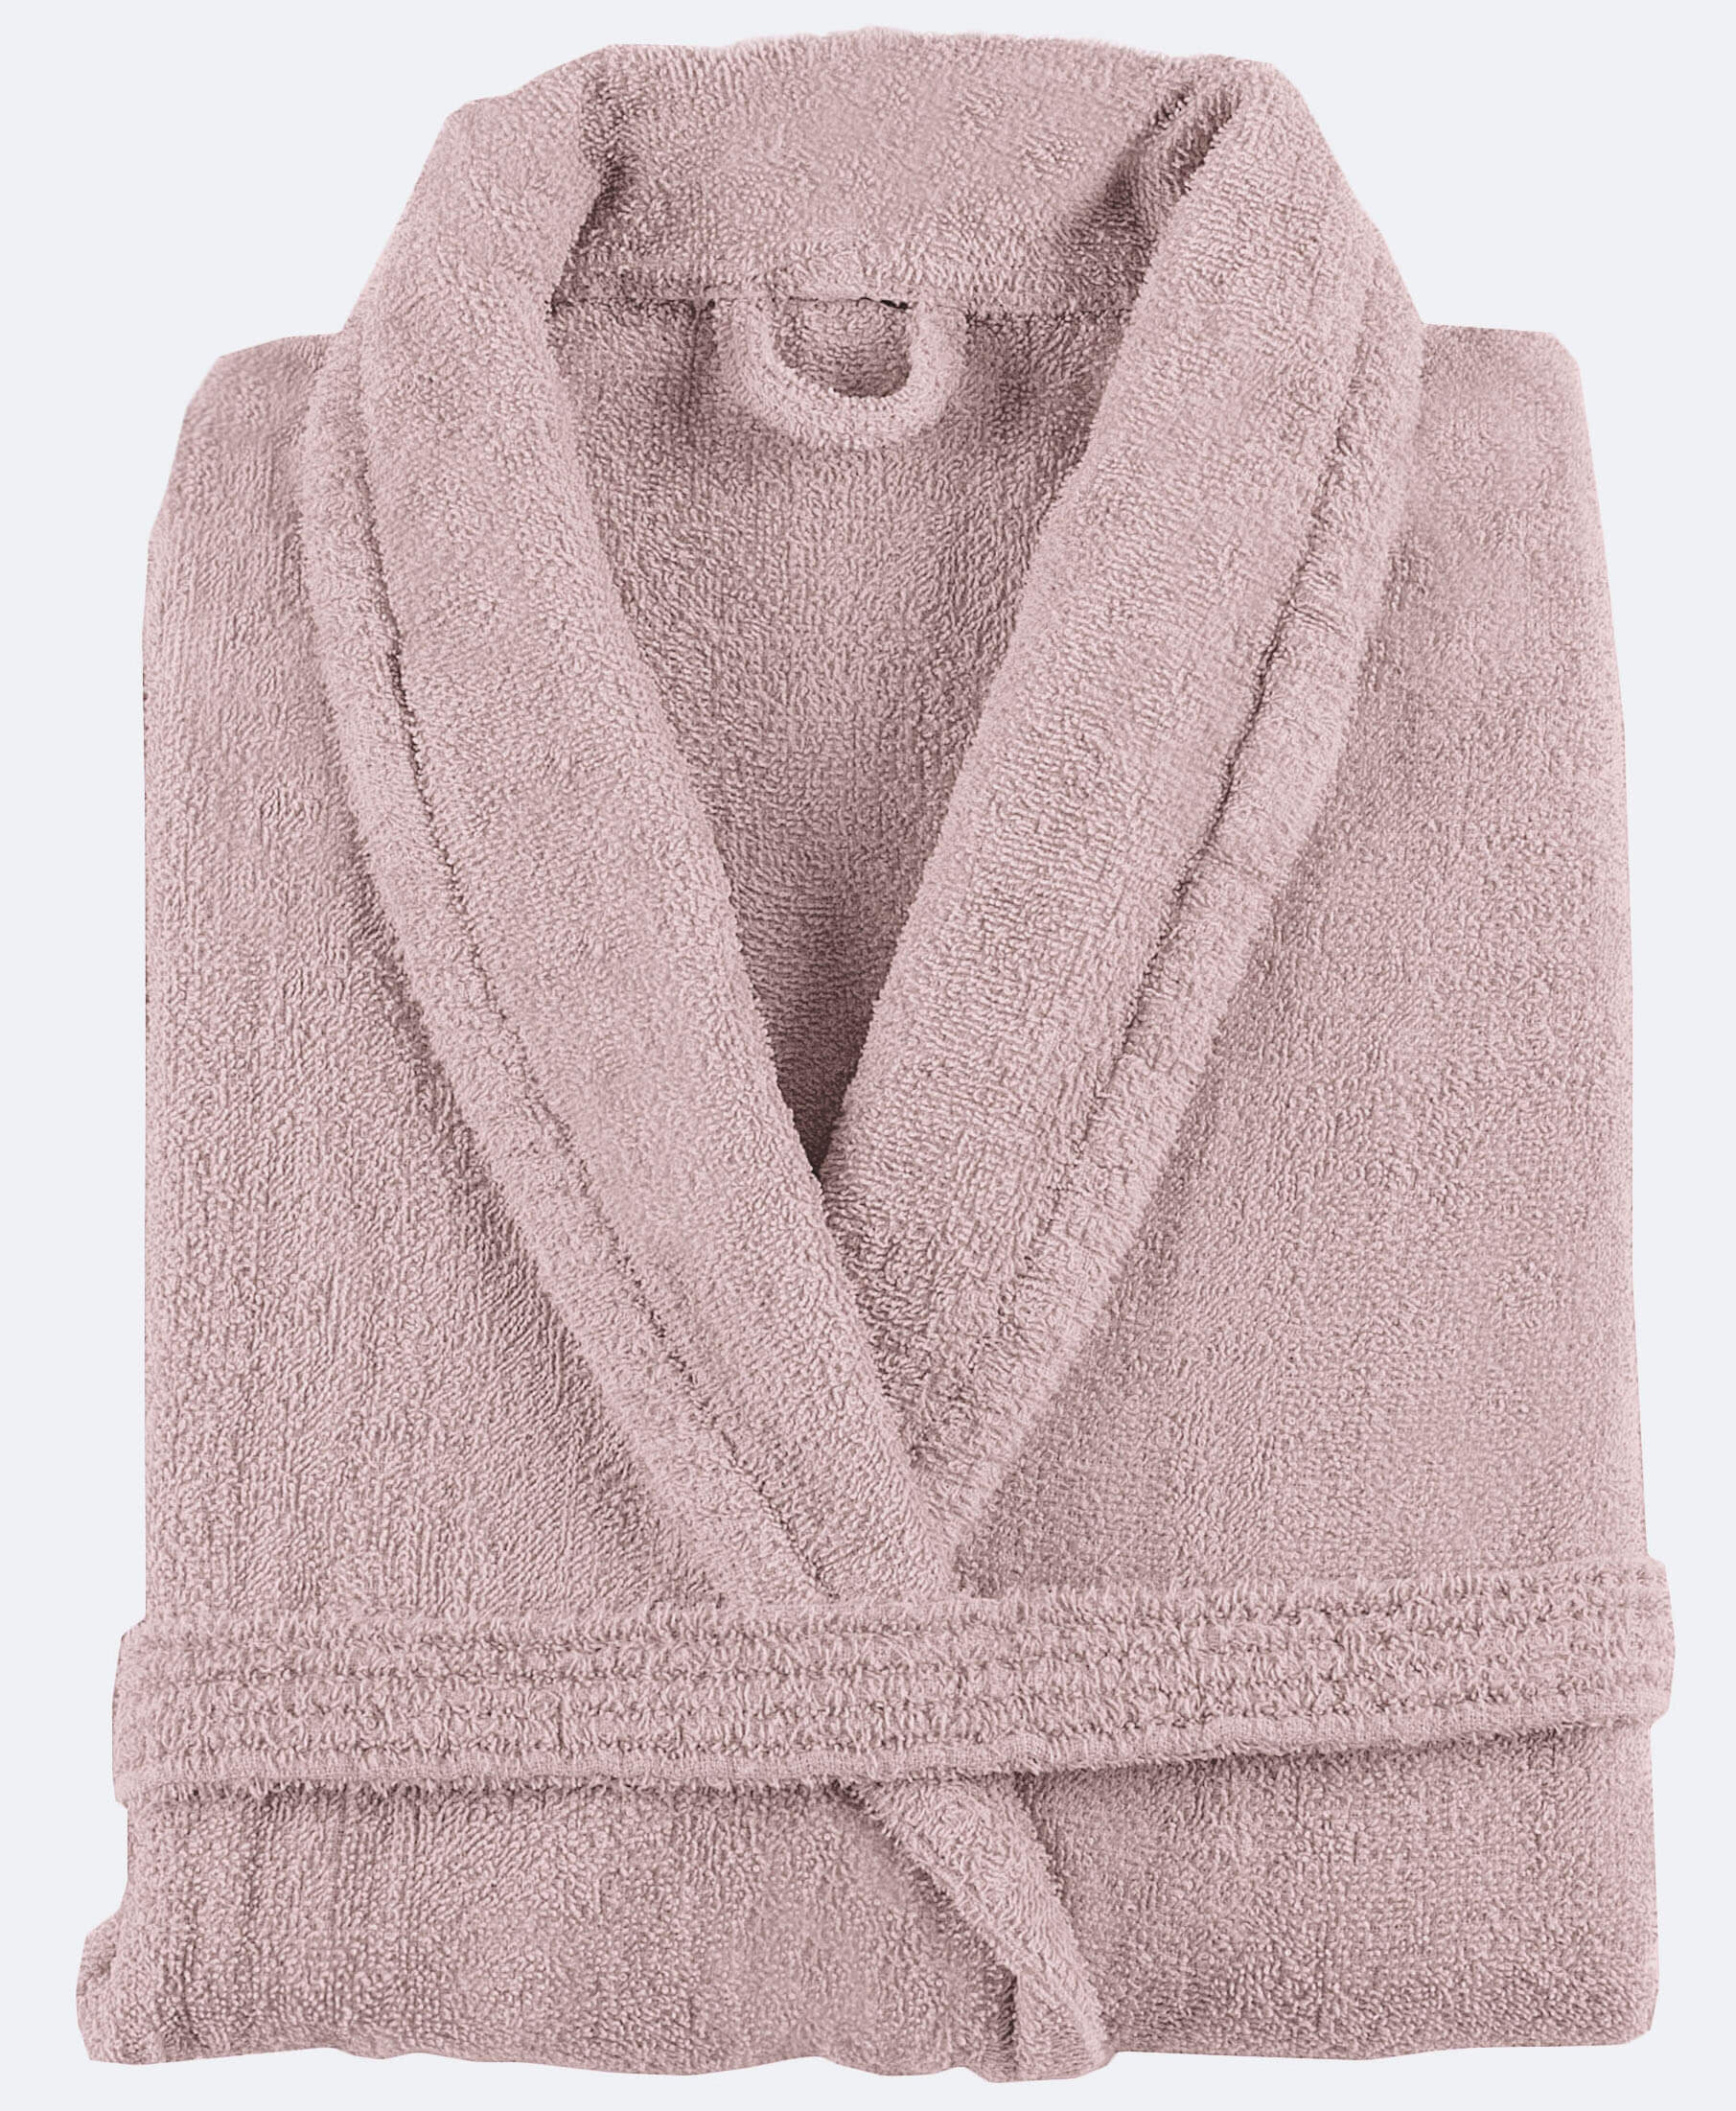 Женский розовый халат New Nude ☞ Размер: M